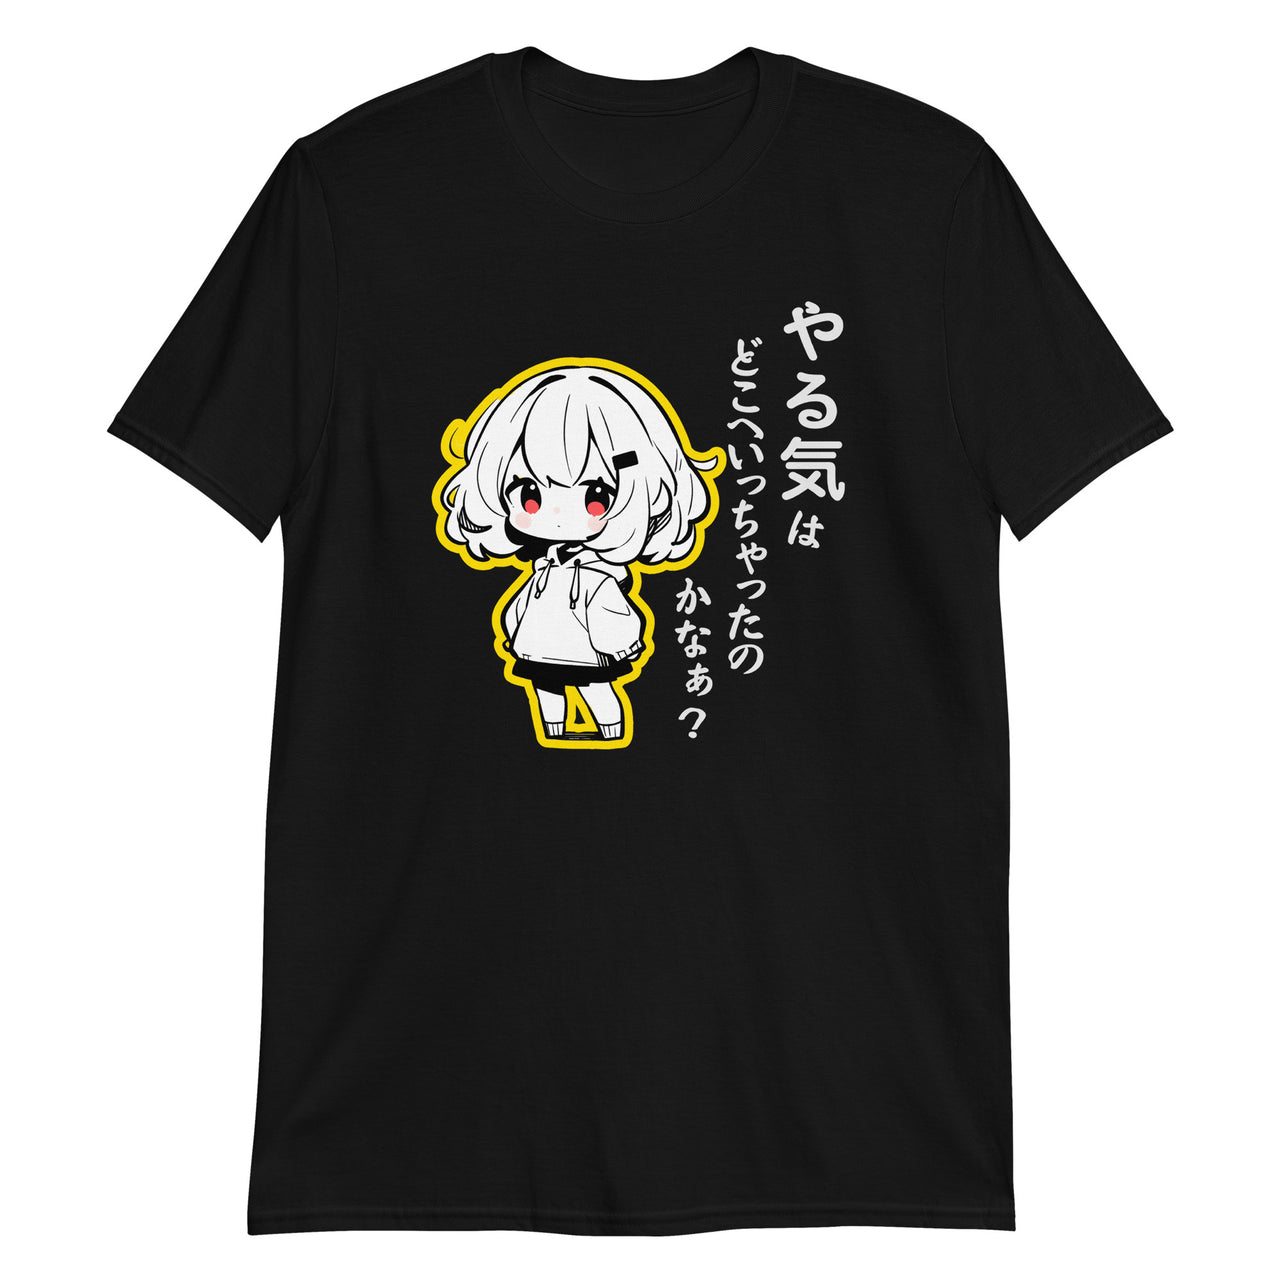 Motivation Missing: Cute Manga Girl T-Shirt